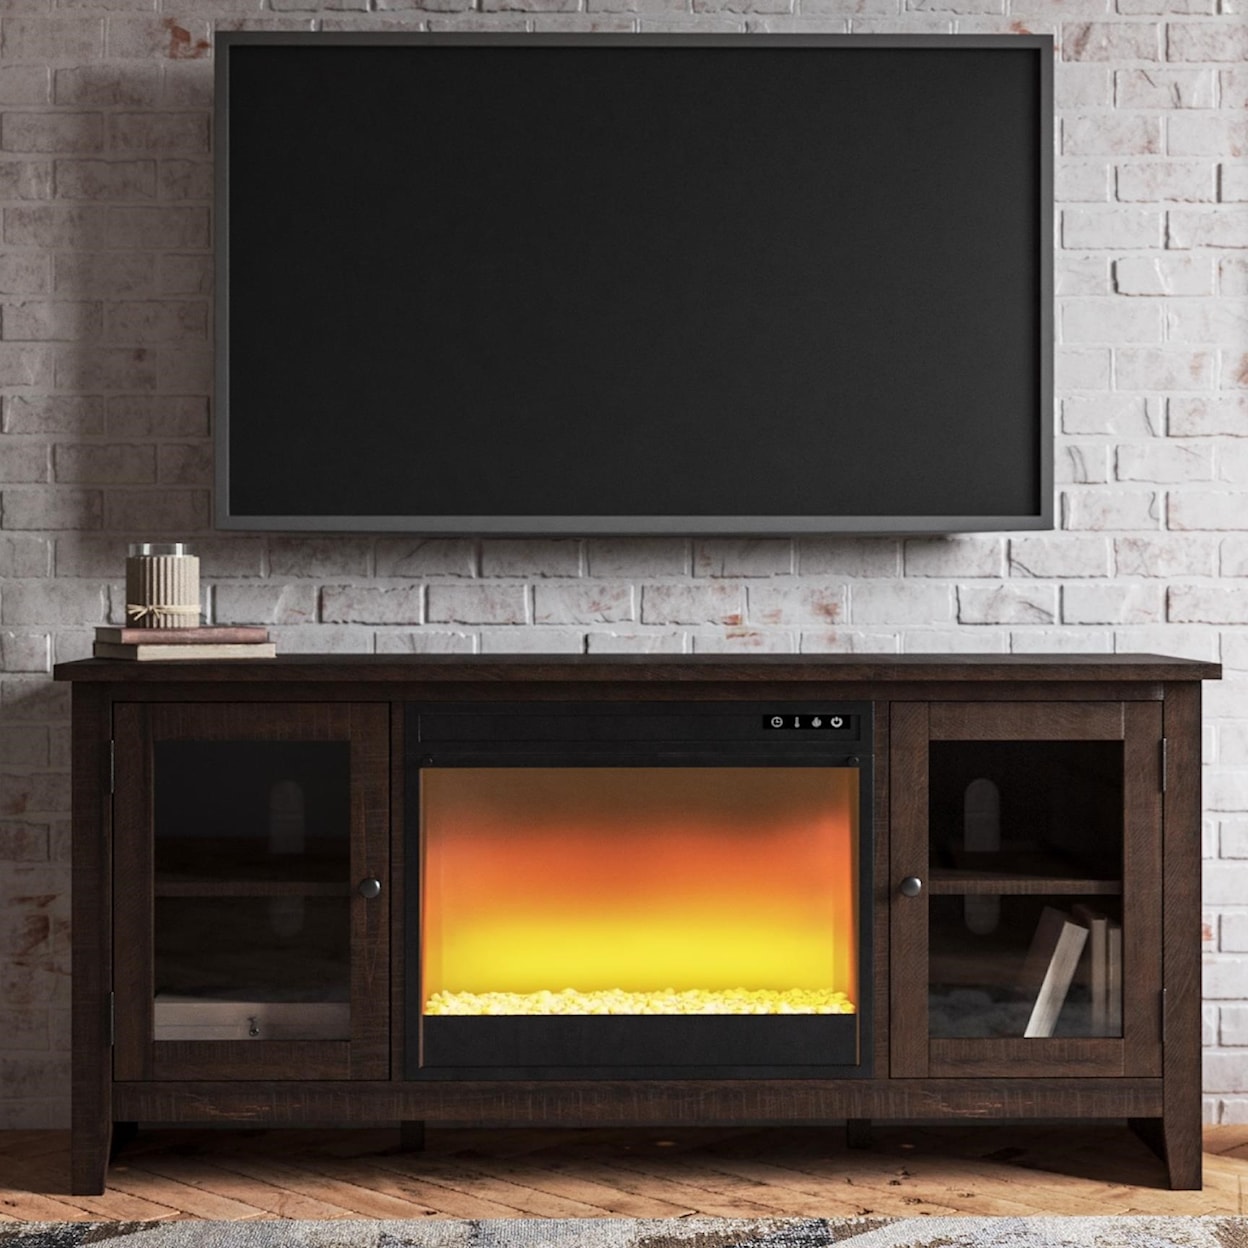 StyleLine Camiburg Large TV Stand w/ Fireplace Insert